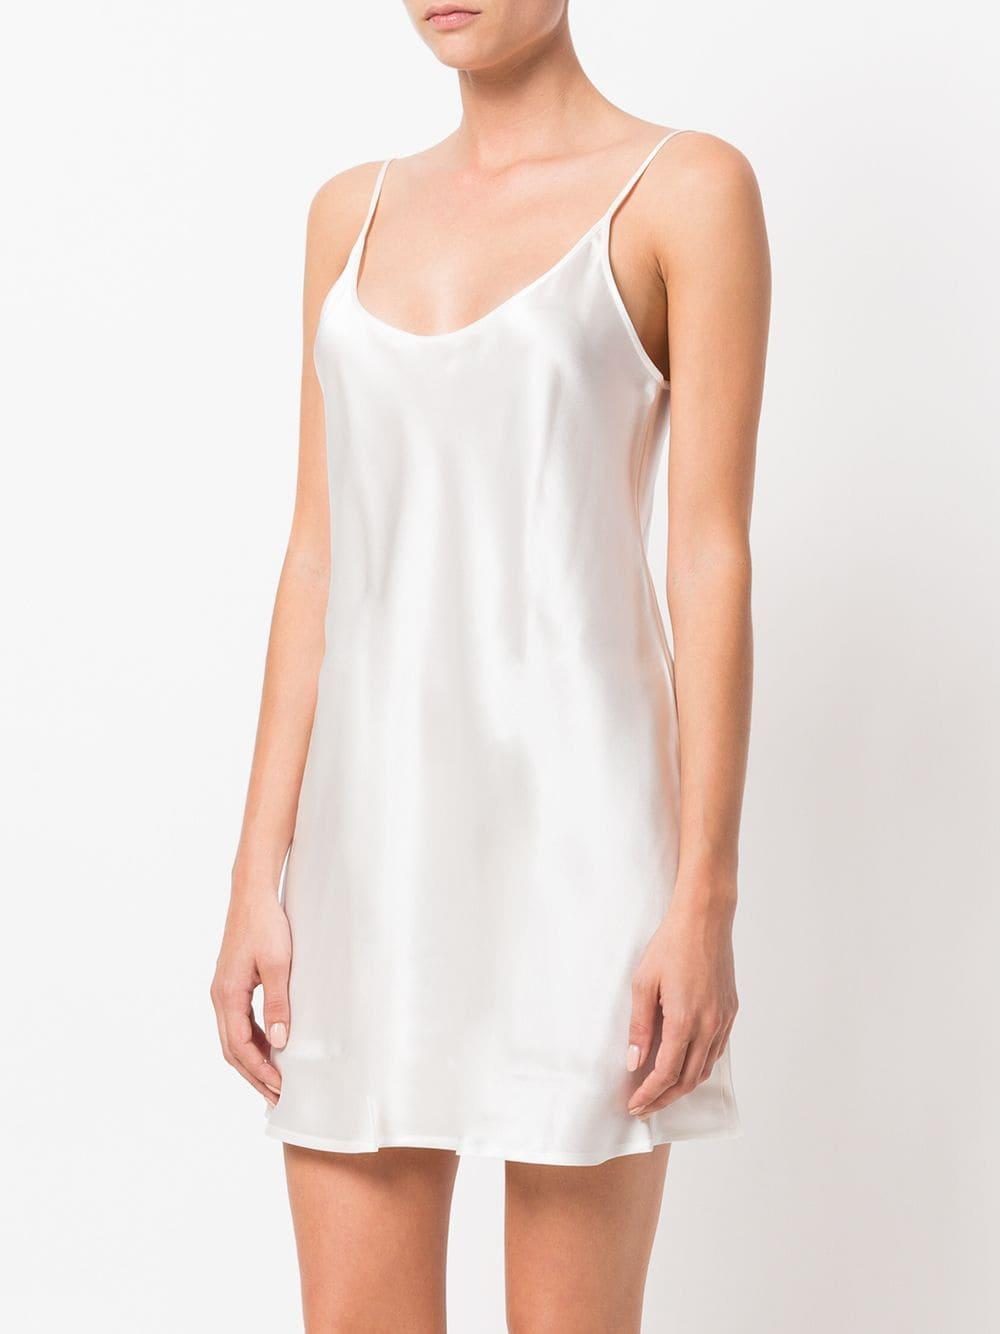 La Perla Silk Slip Dress in White - Save 29% - Lyst